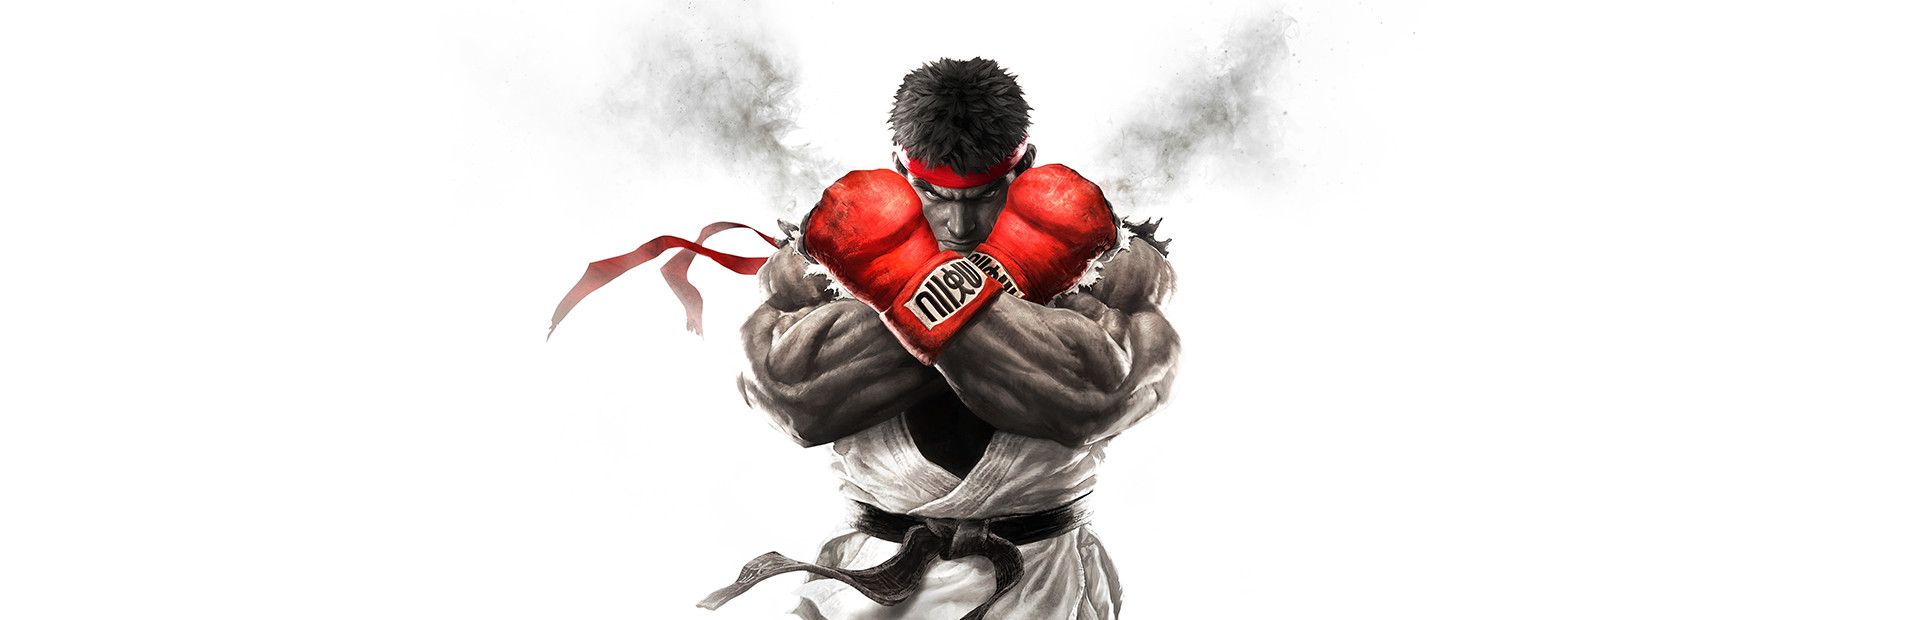 Street Fighter V cover image